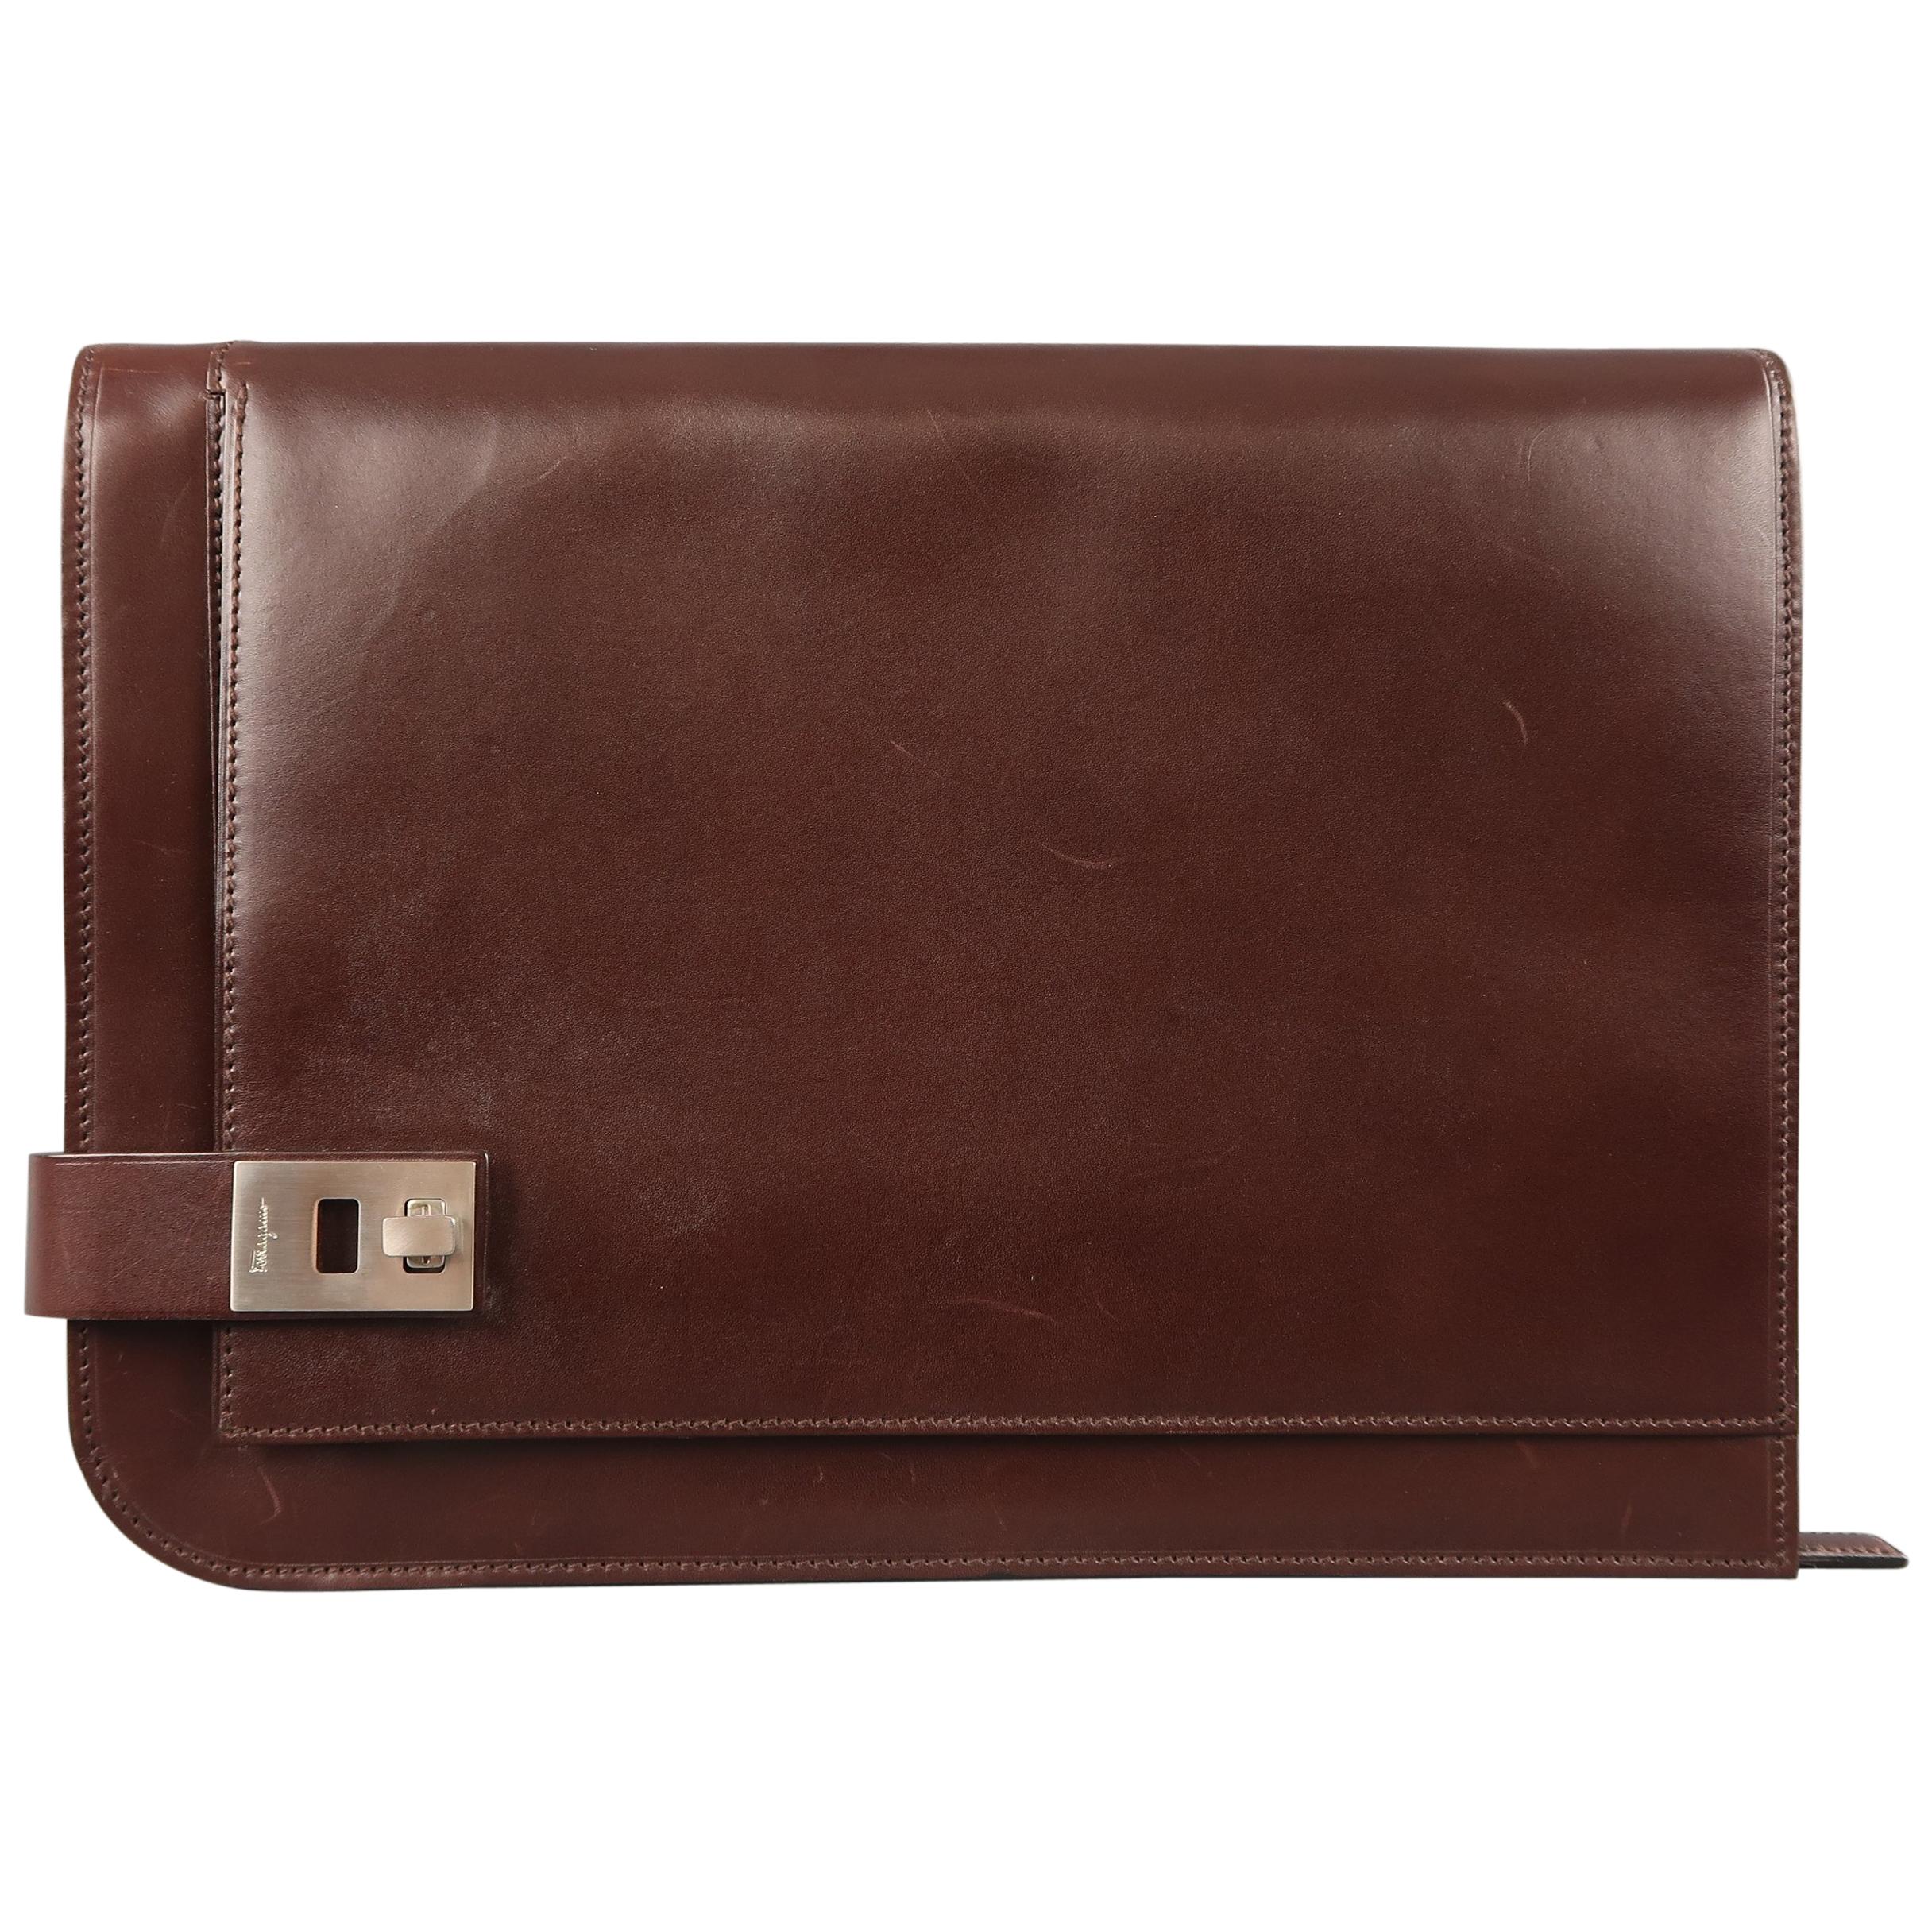 SALVATORE FERRAGAMO Oxblood Brown Leather Portfolio Briefcase